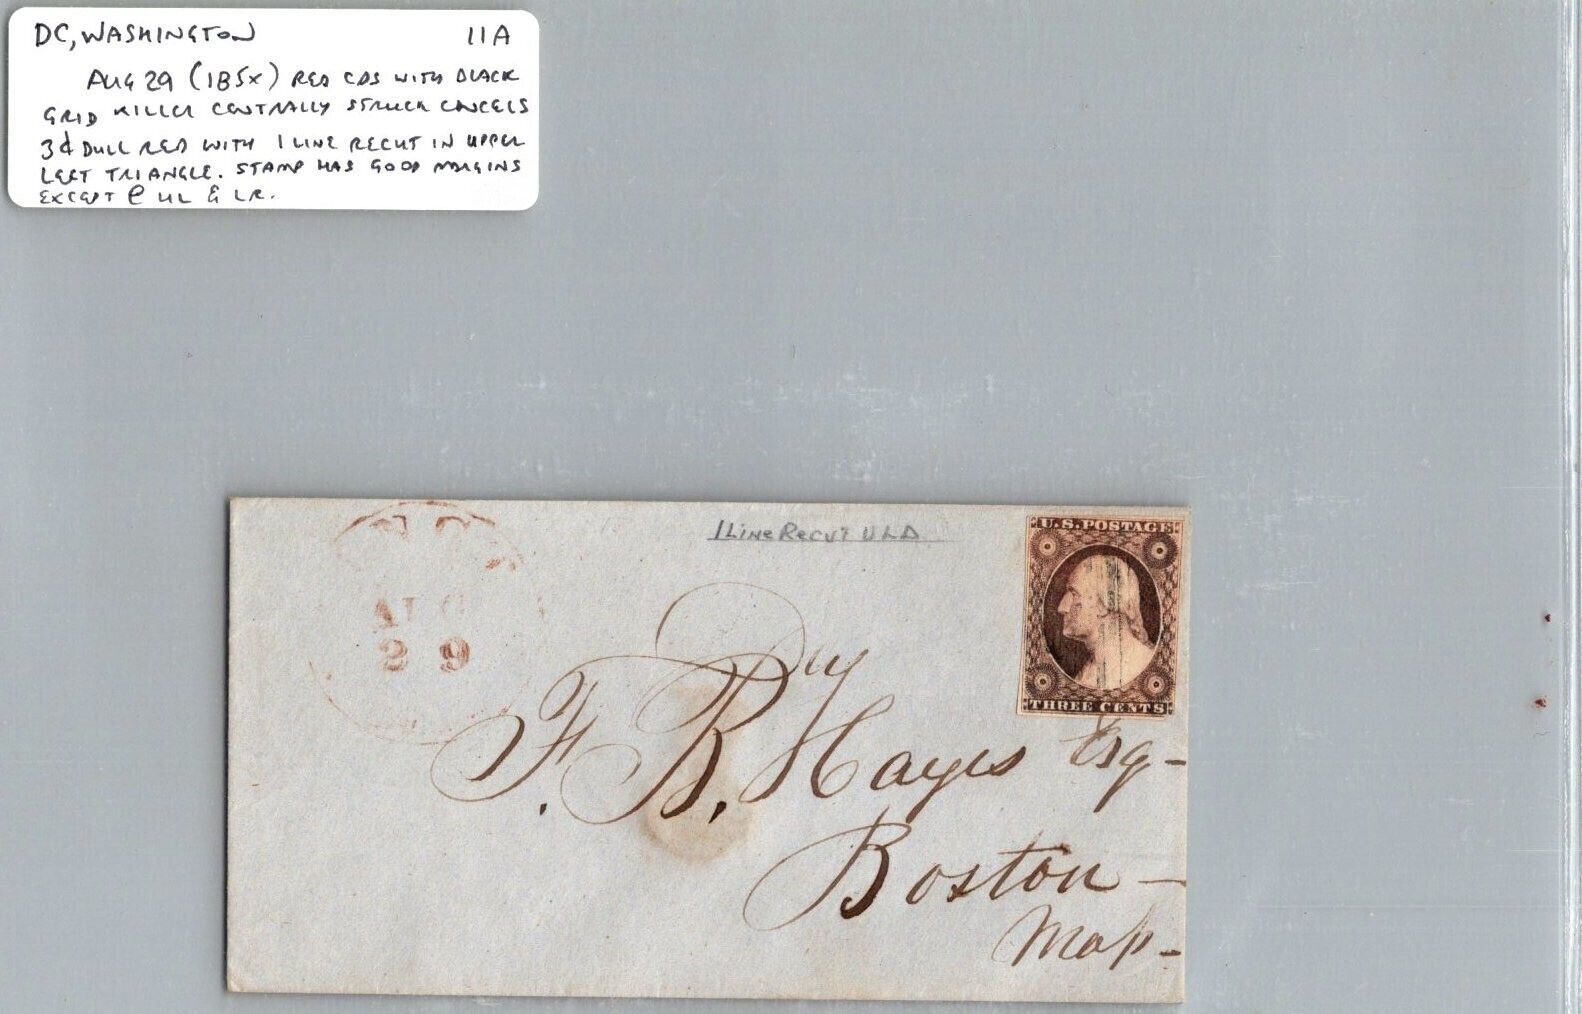 US Aug 29 185x Scott #11a Red CDS Postmark Washington DC to Boston MA